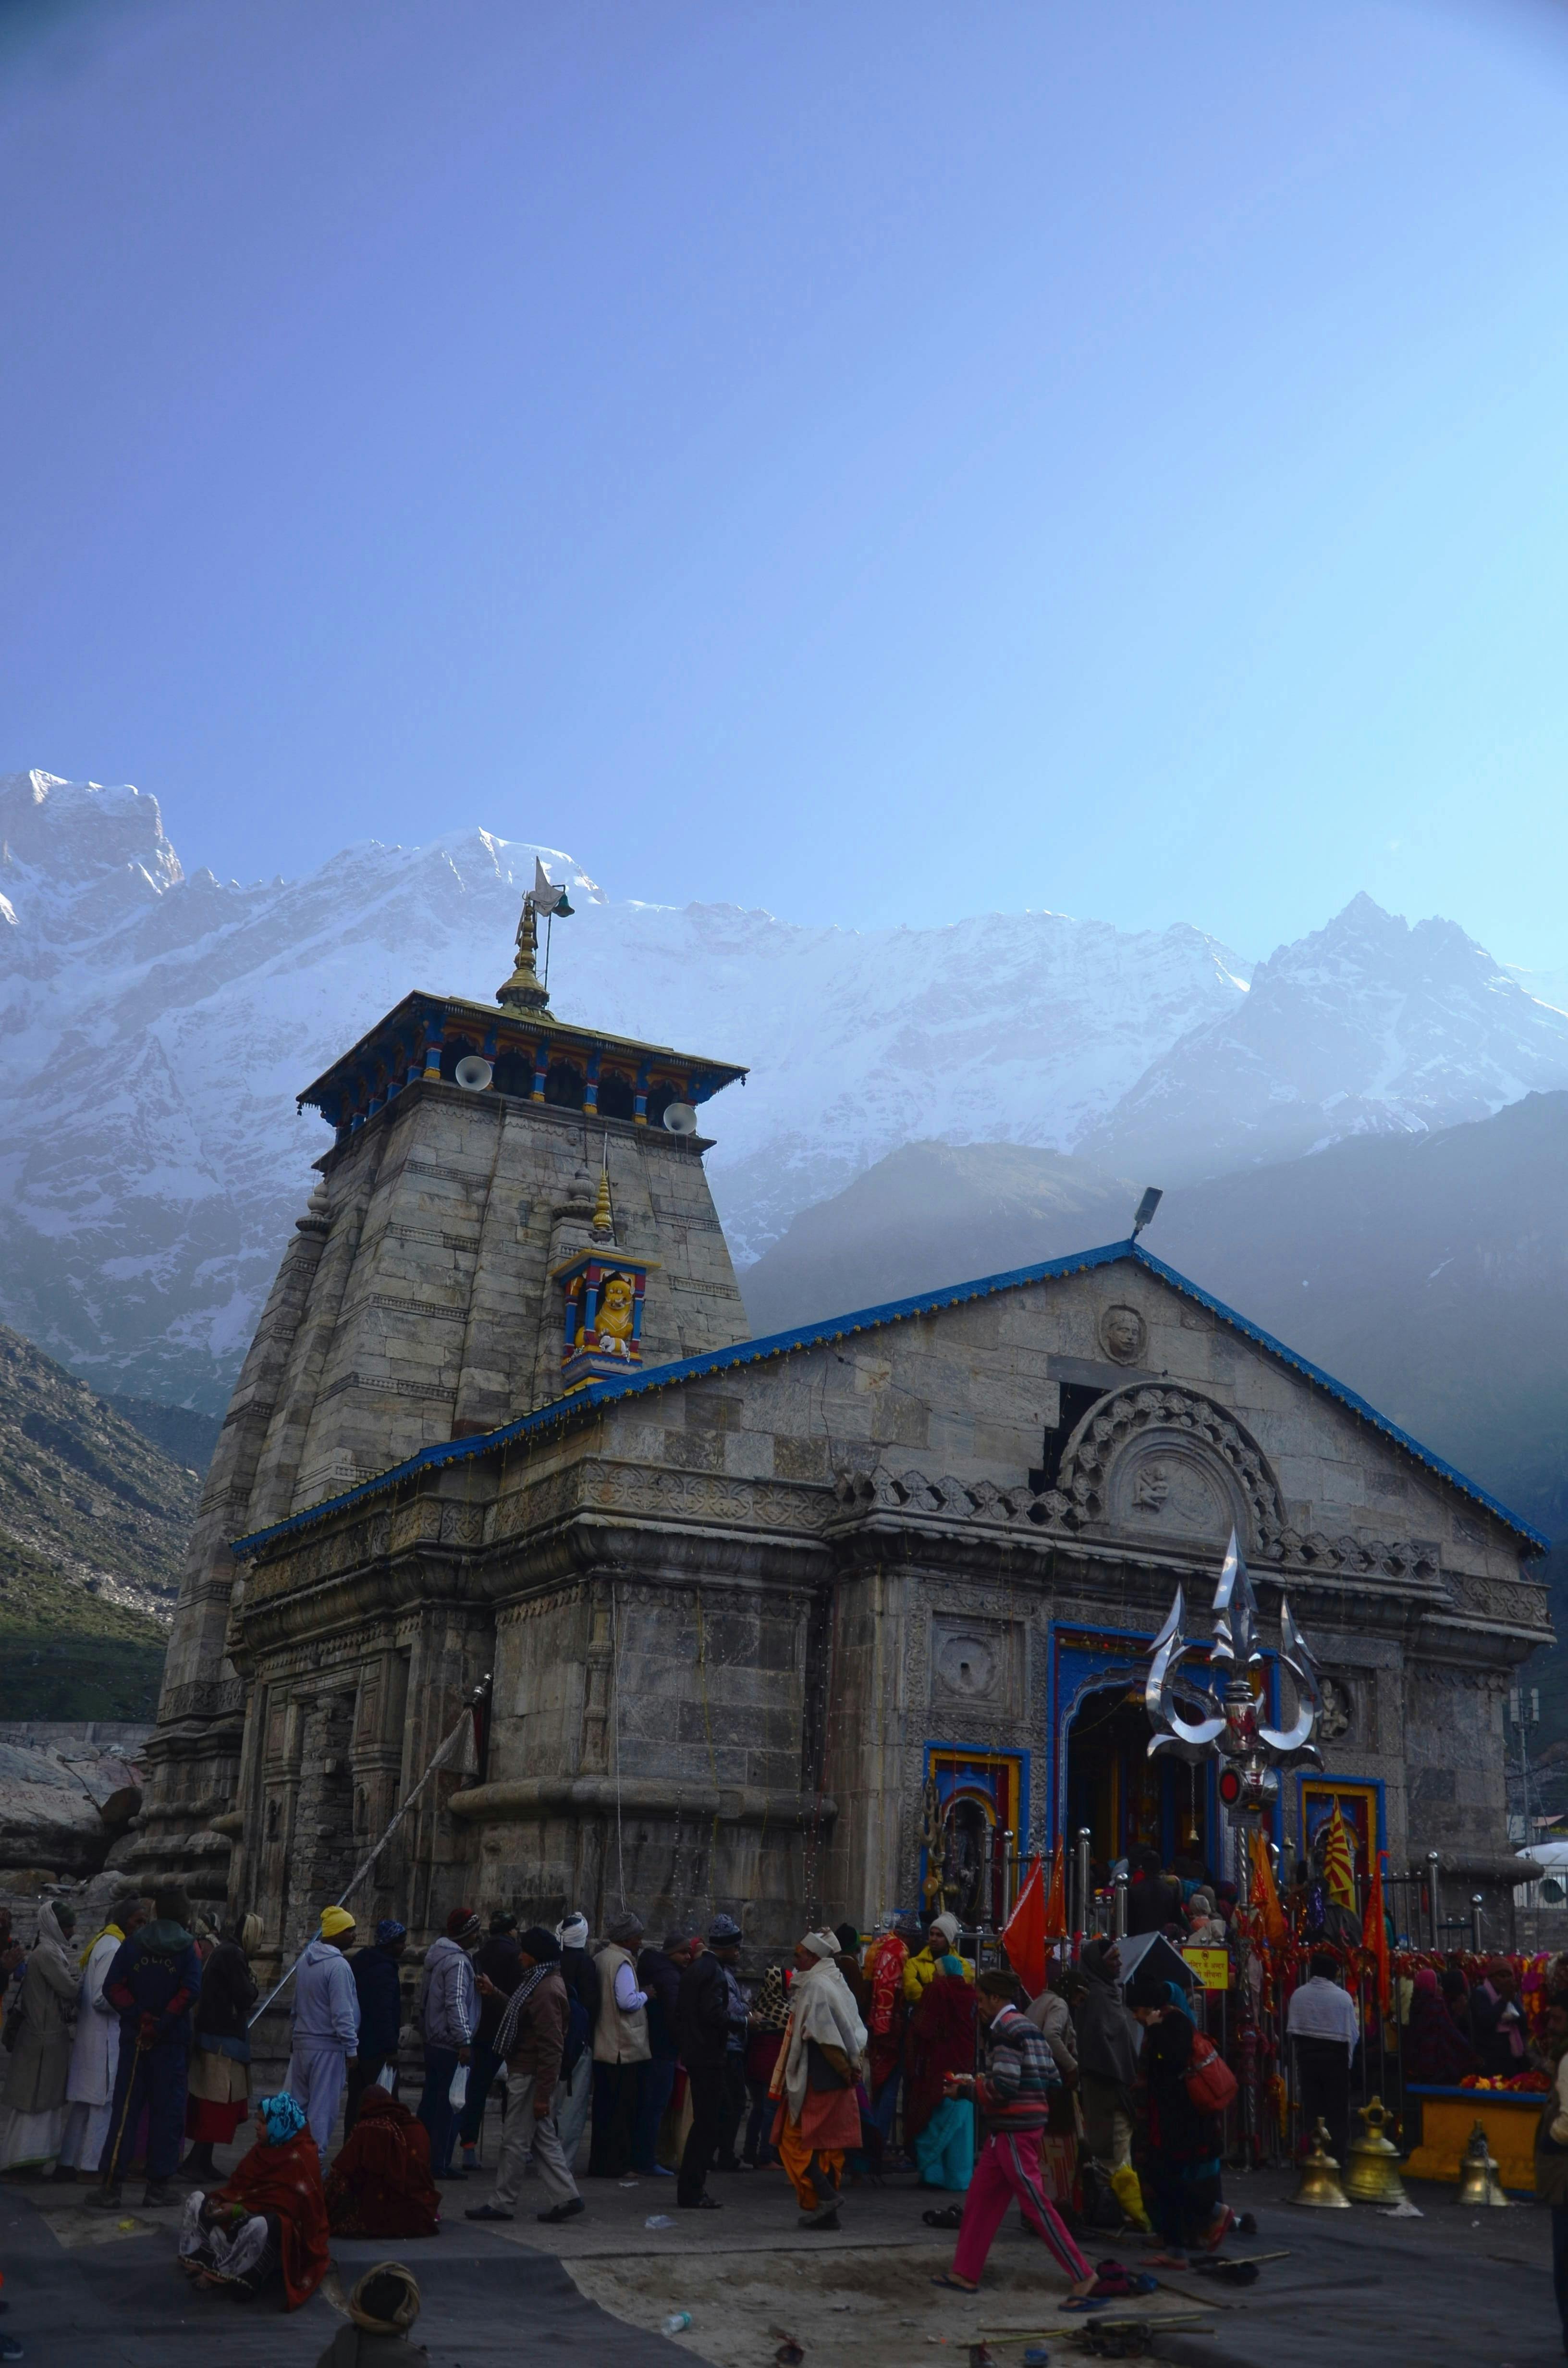 Kedarnath Photos, Download The BEST Free Kedarnath Stock Photos & HD Images